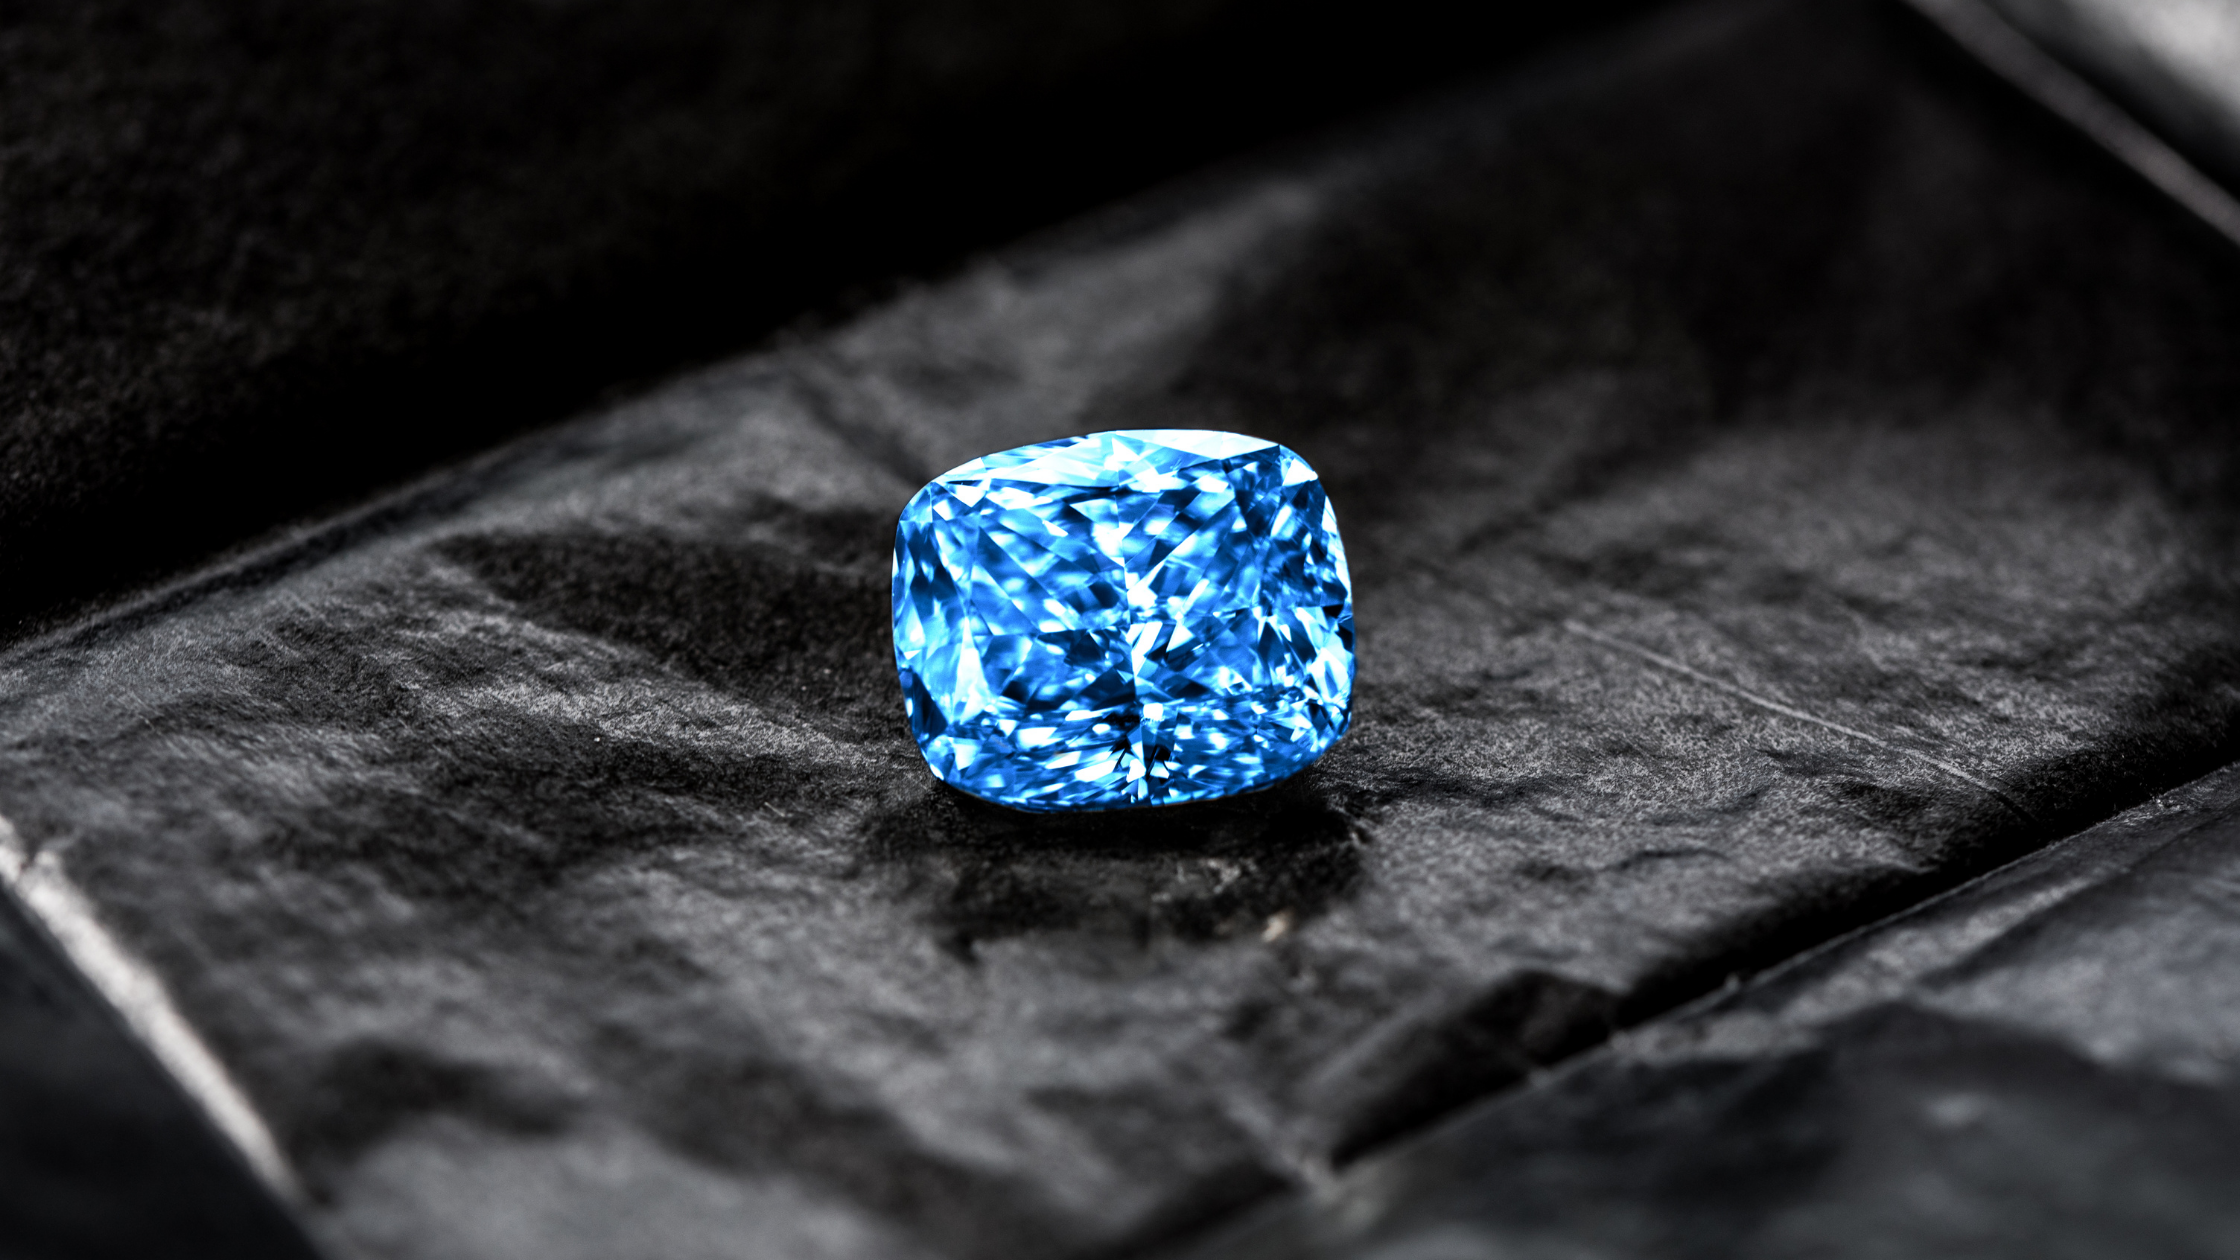 Where Are Blue Diamonds Found?